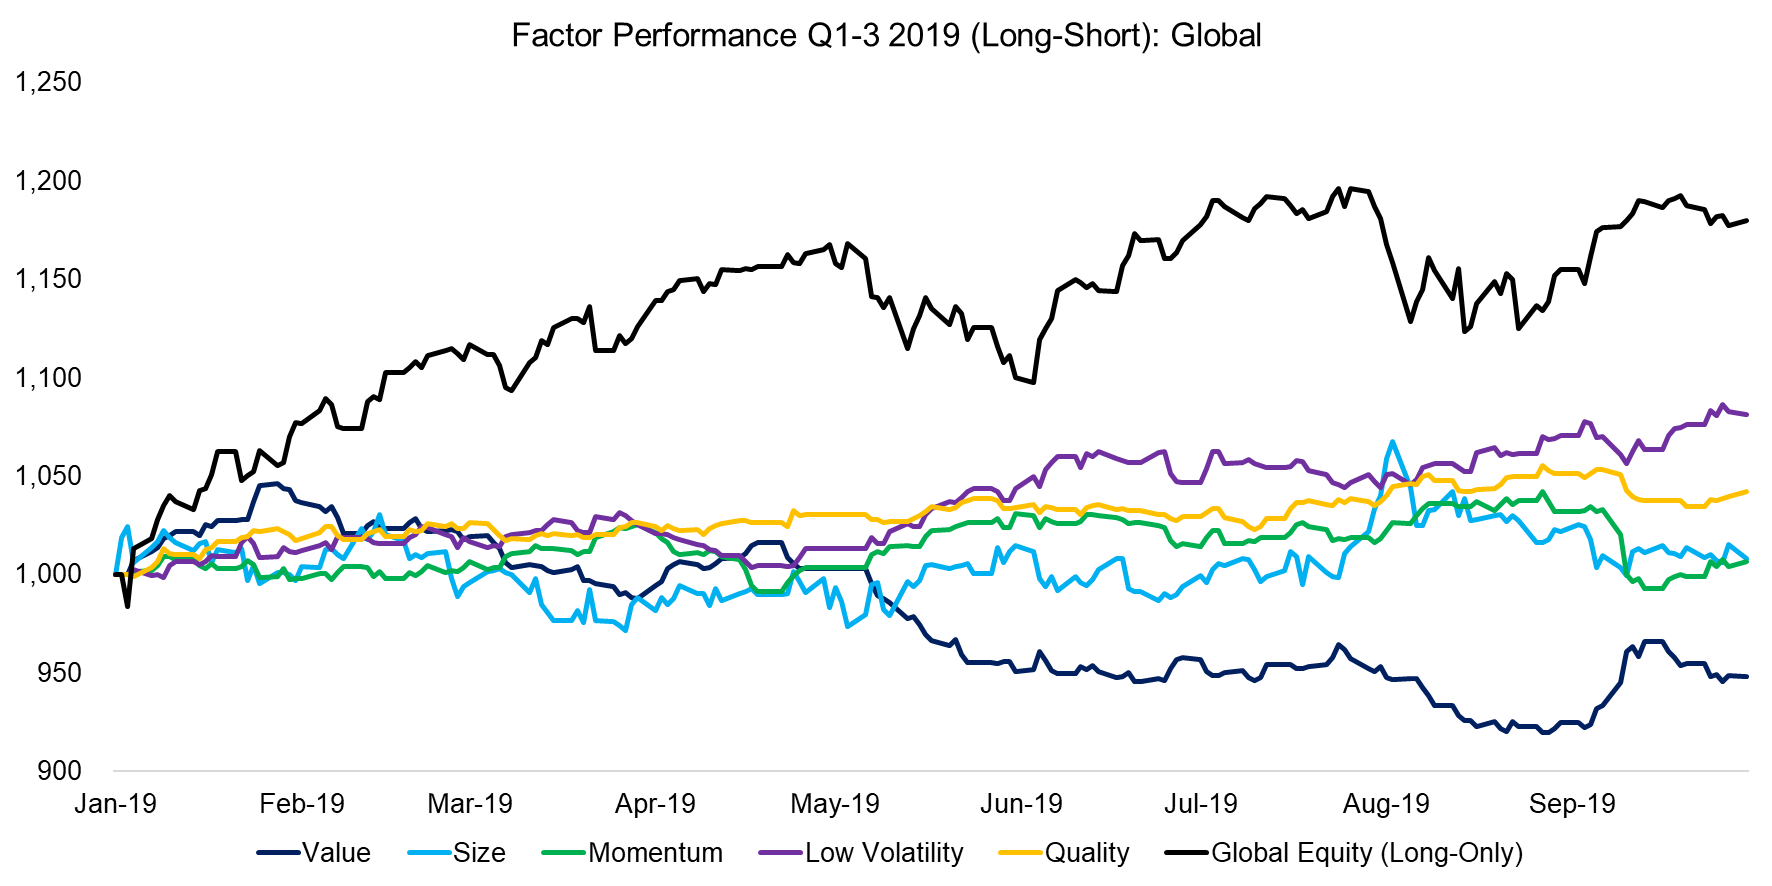 Factor Performance Q1-3 2019 (Long-Short) Global